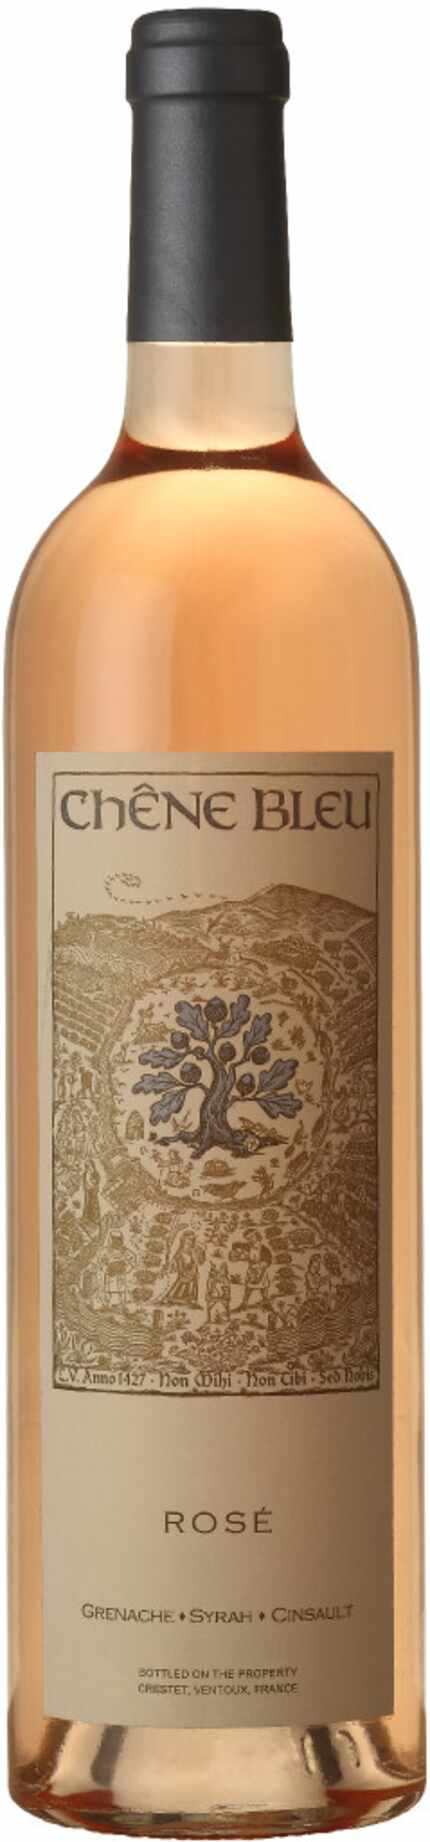 Chene Bleu, Vaucluse IGP, Rose  2015 ($29.99) 